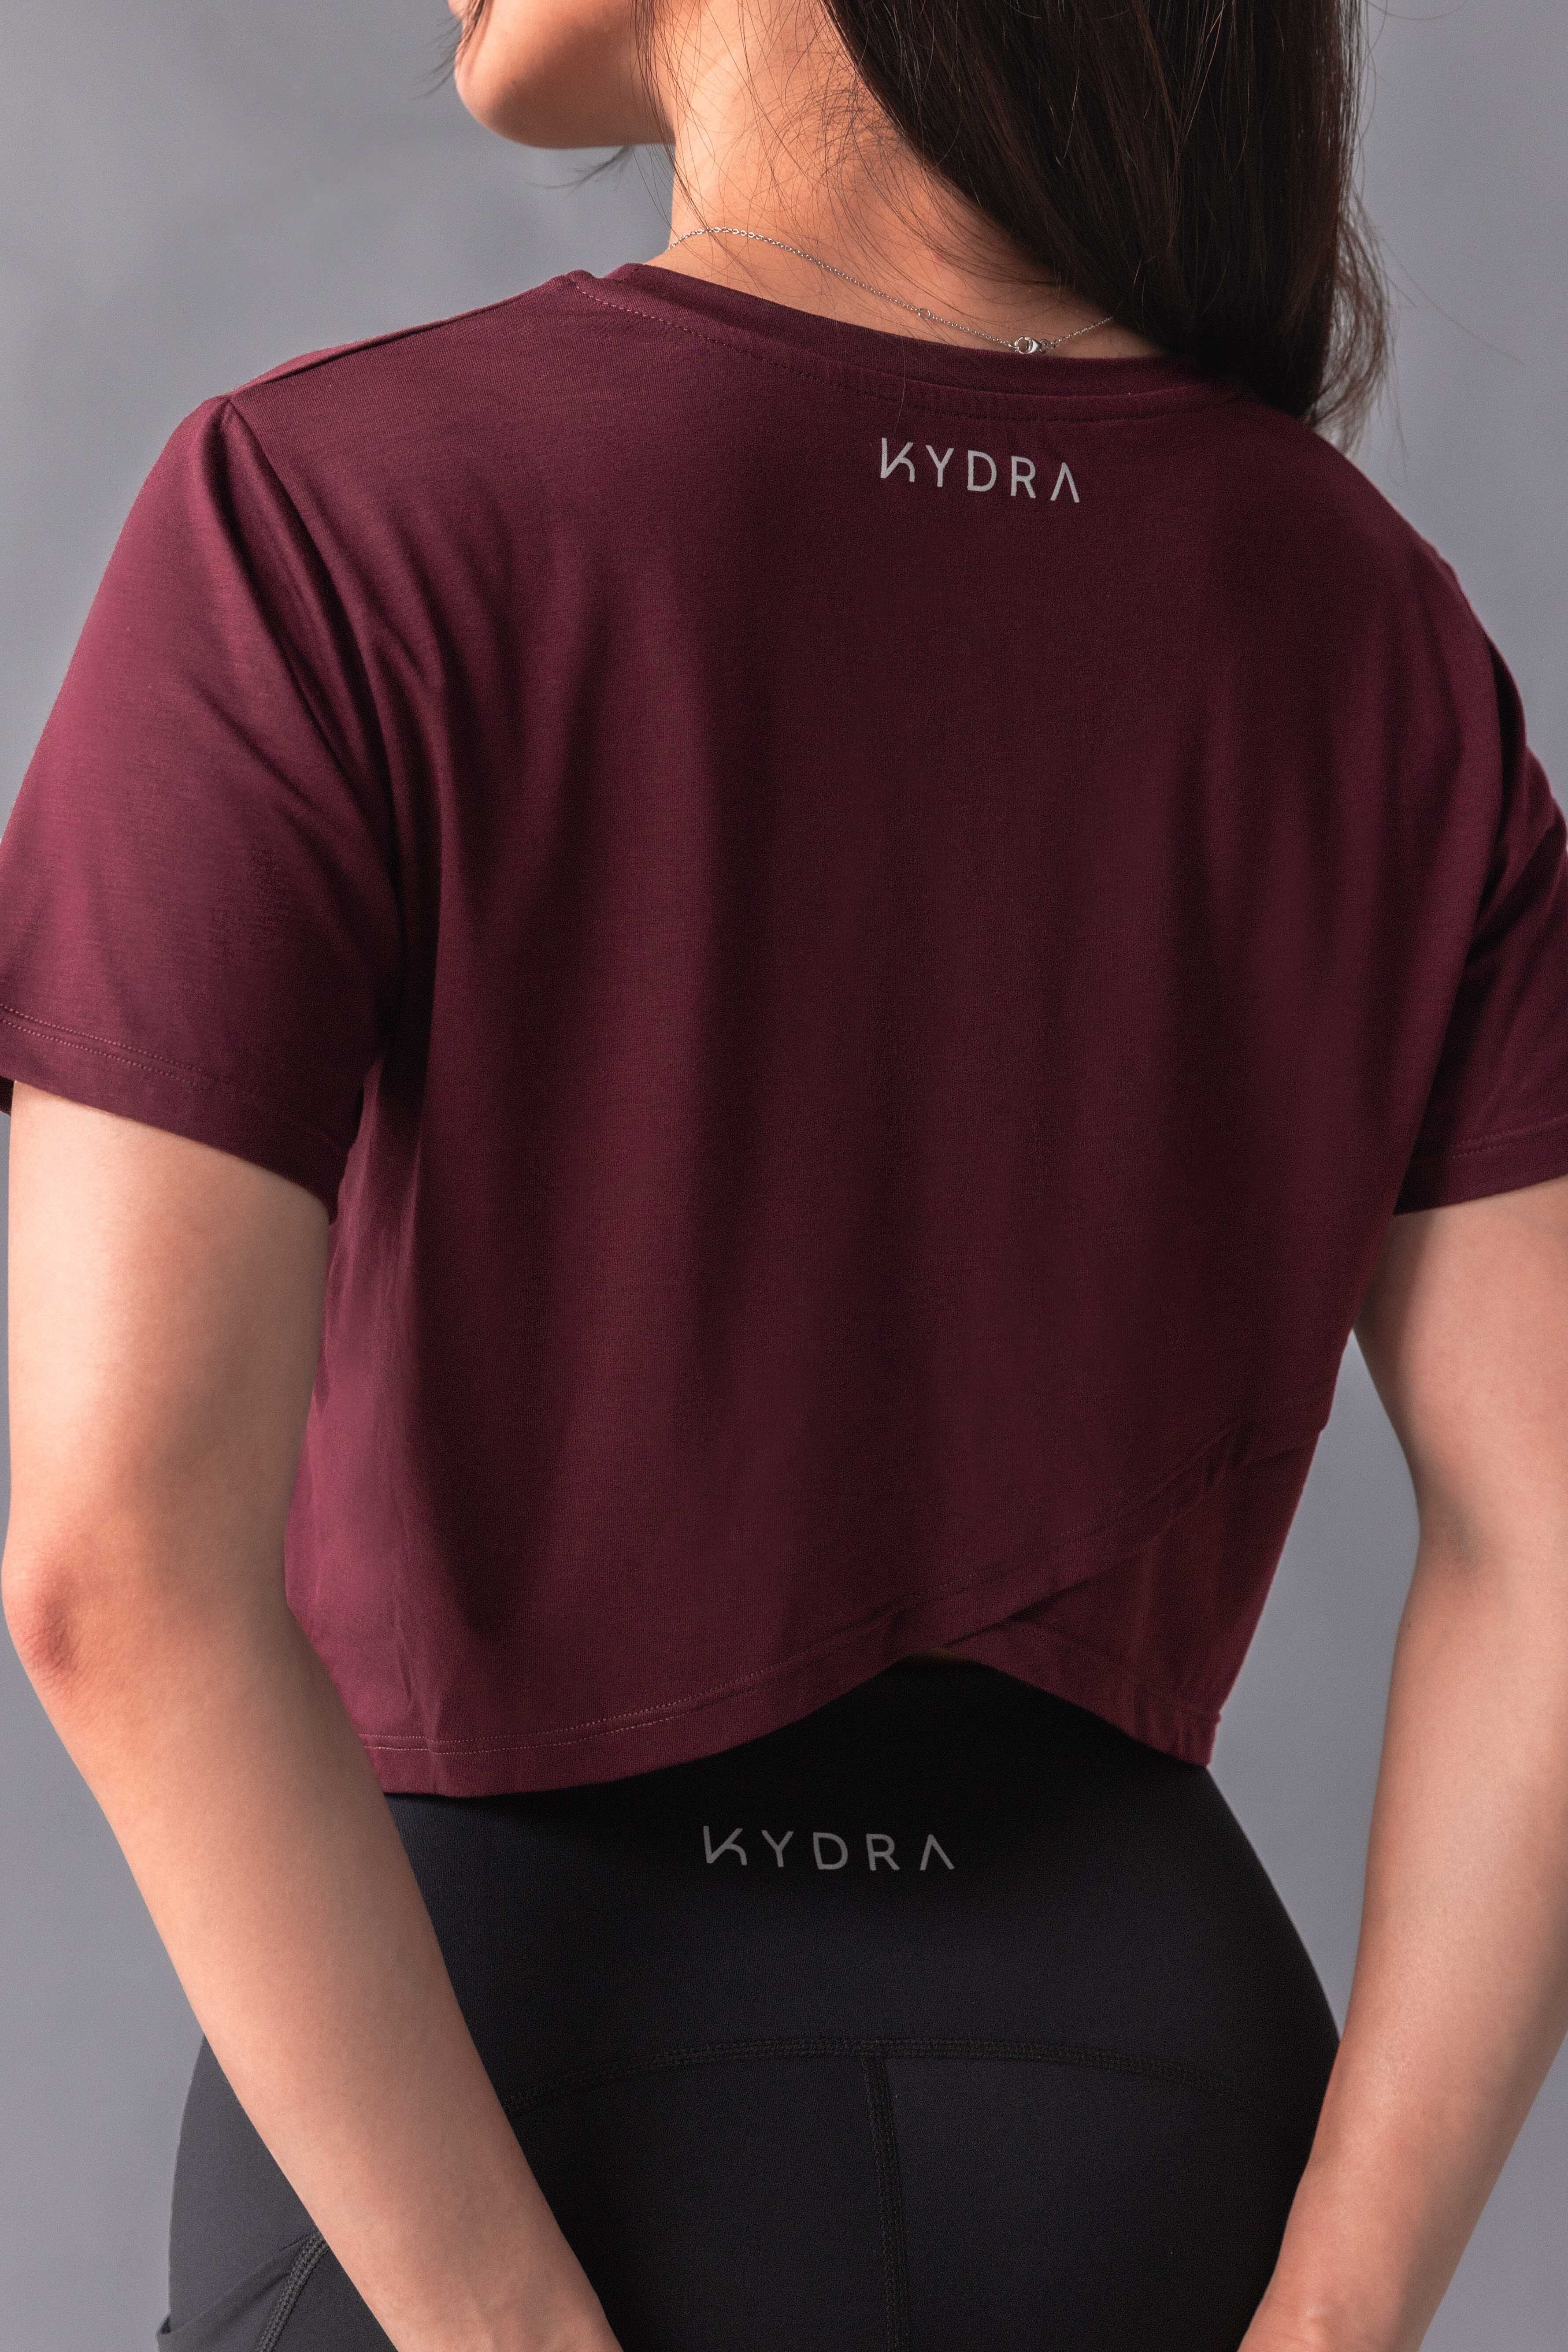 Affordable kydra For Sale, Men's Fashion